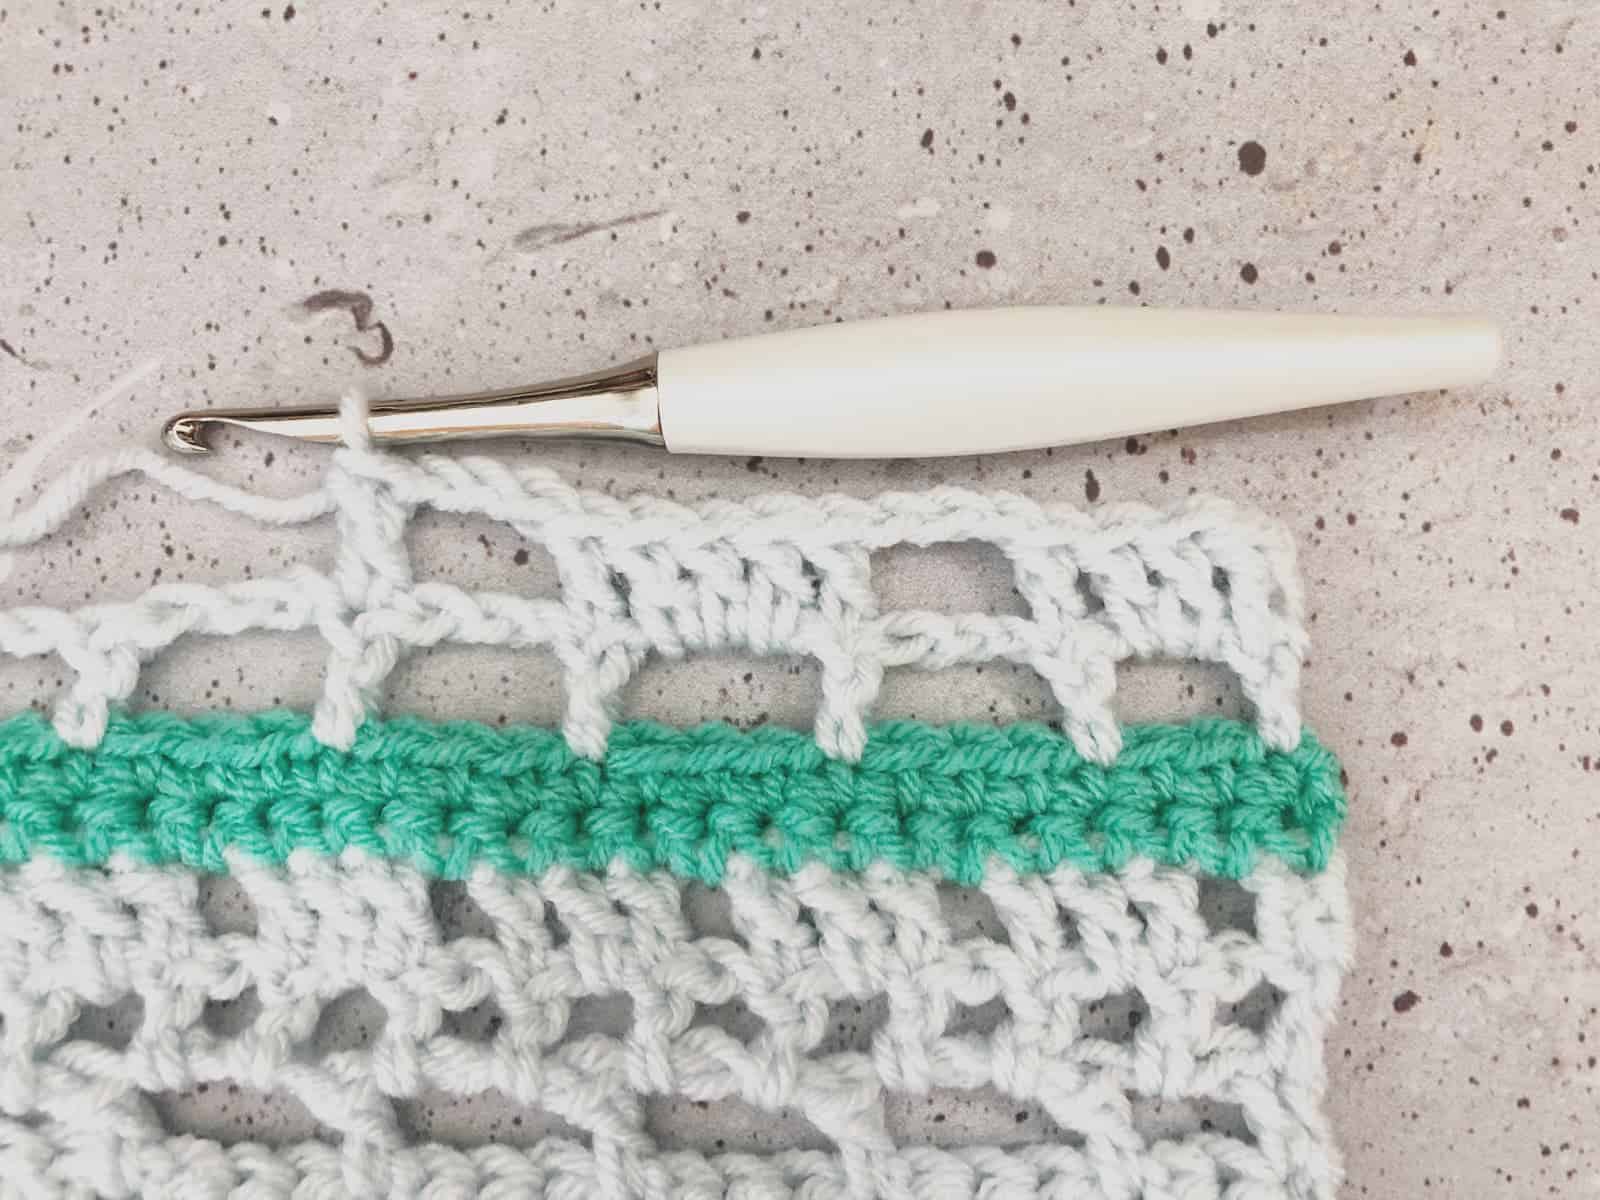 Crochet blocks starting row 16.